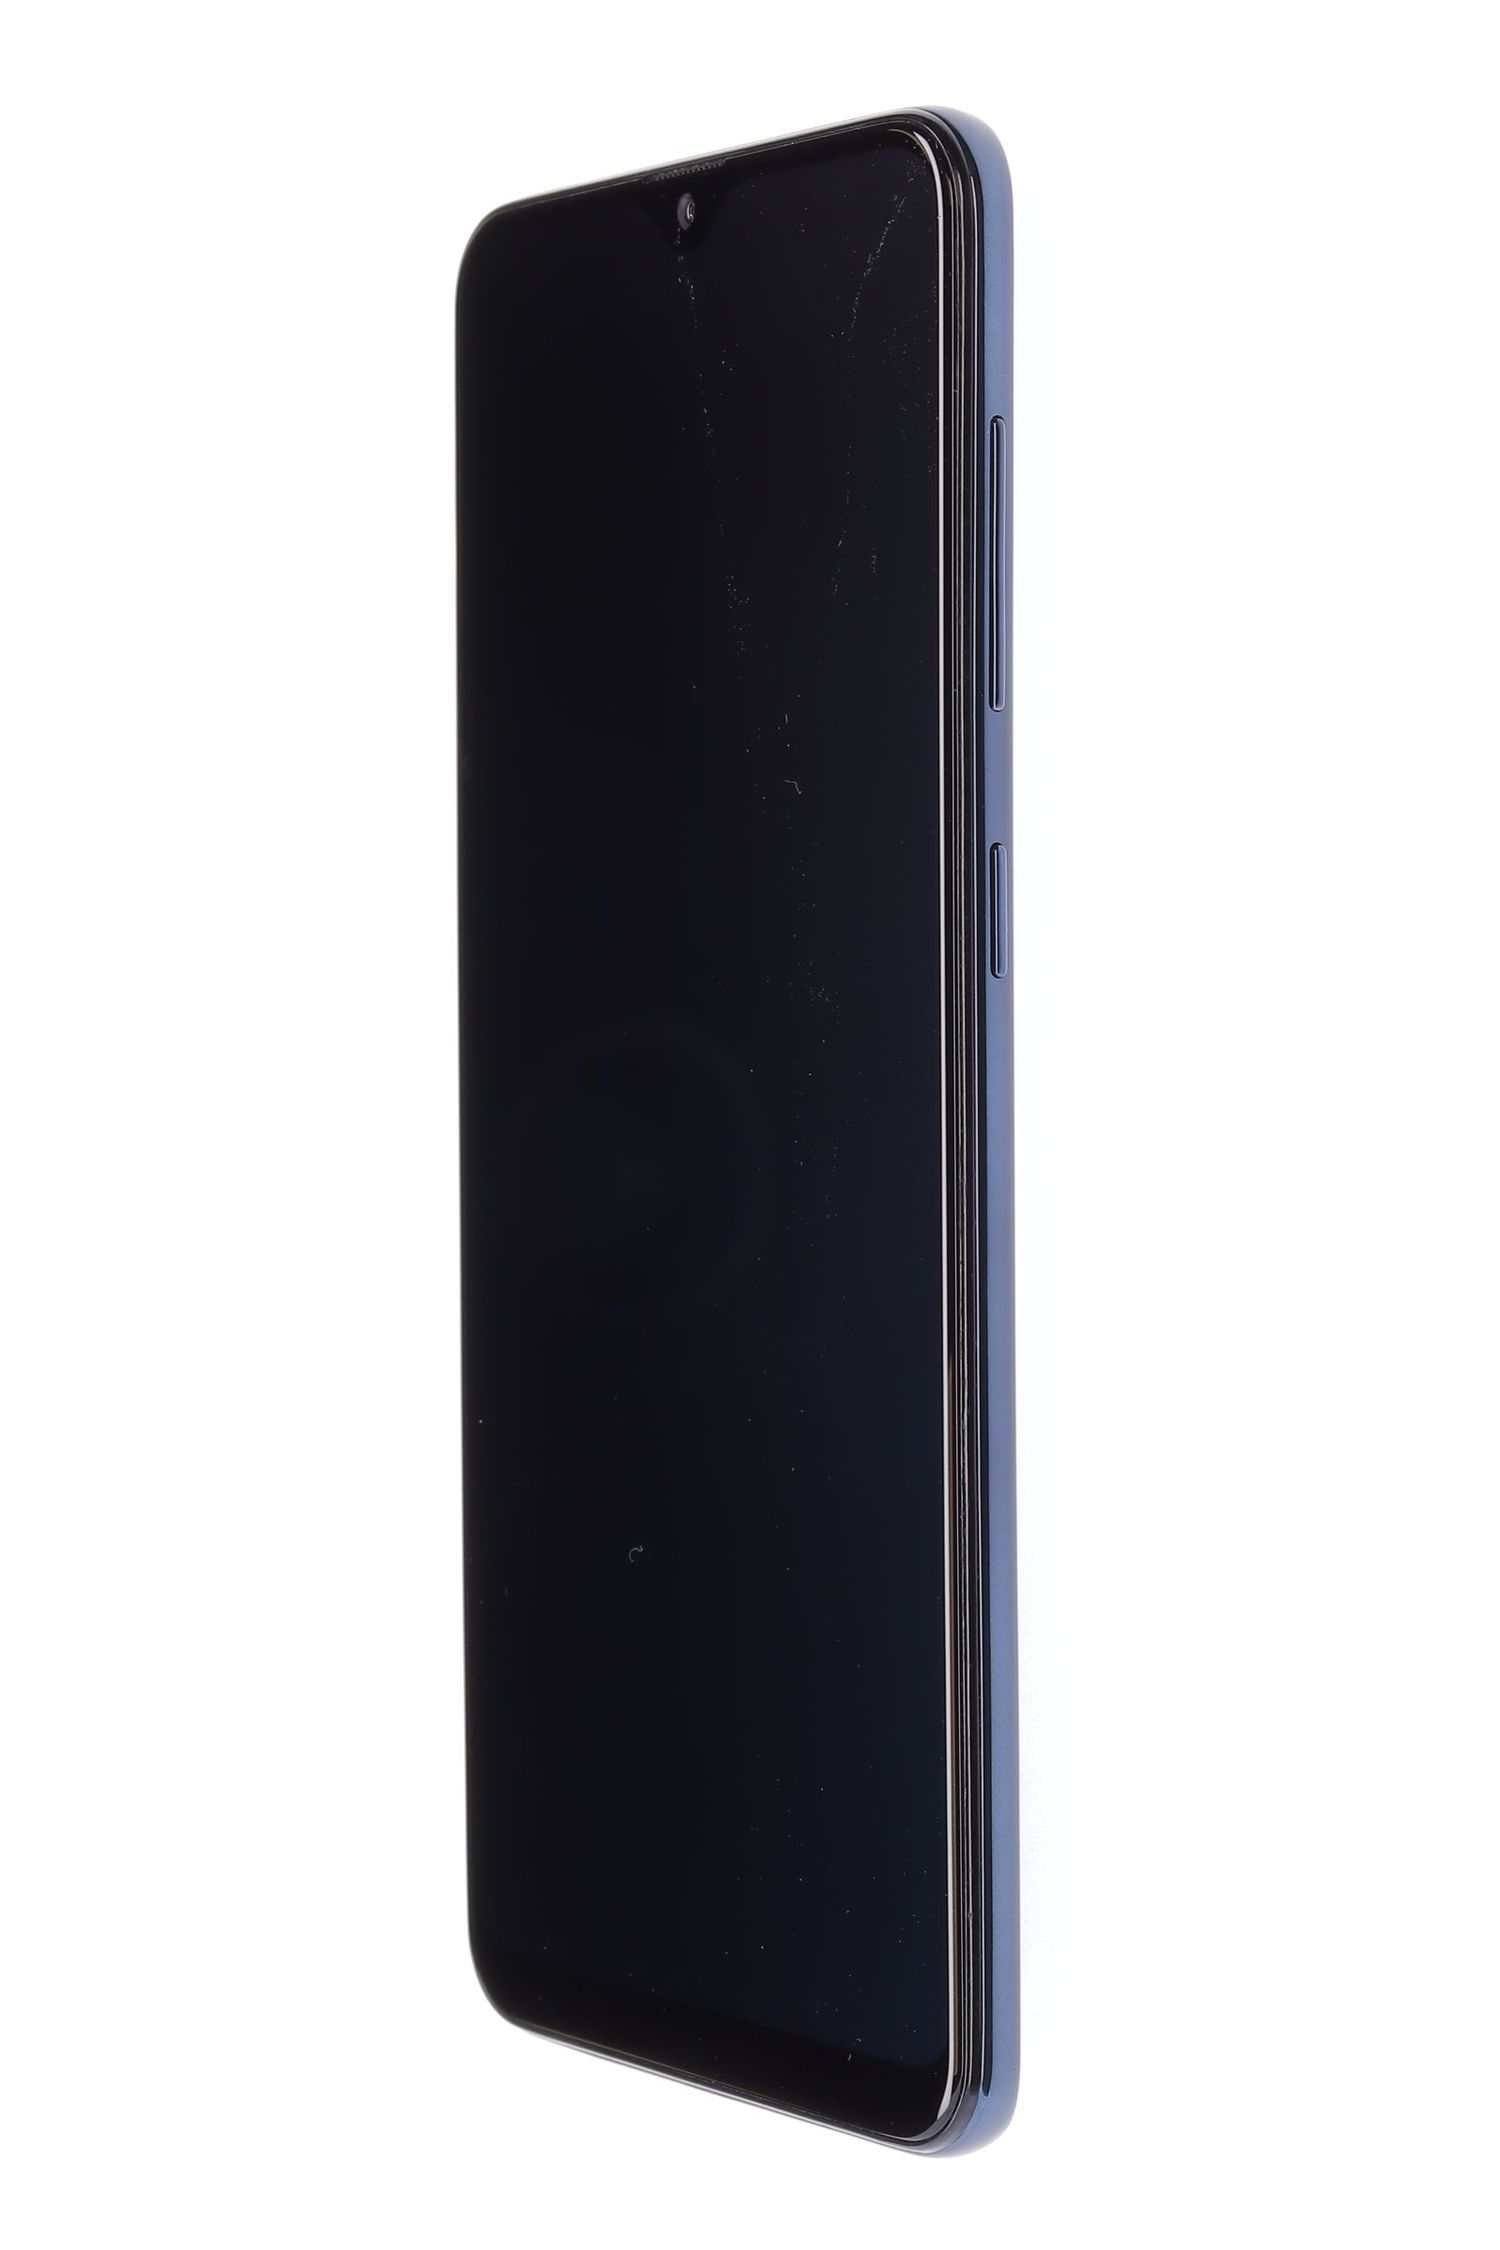 Mobiltelefon Samsung Galaxy A30S Dual Sim, Black, 64 GB, Excelent